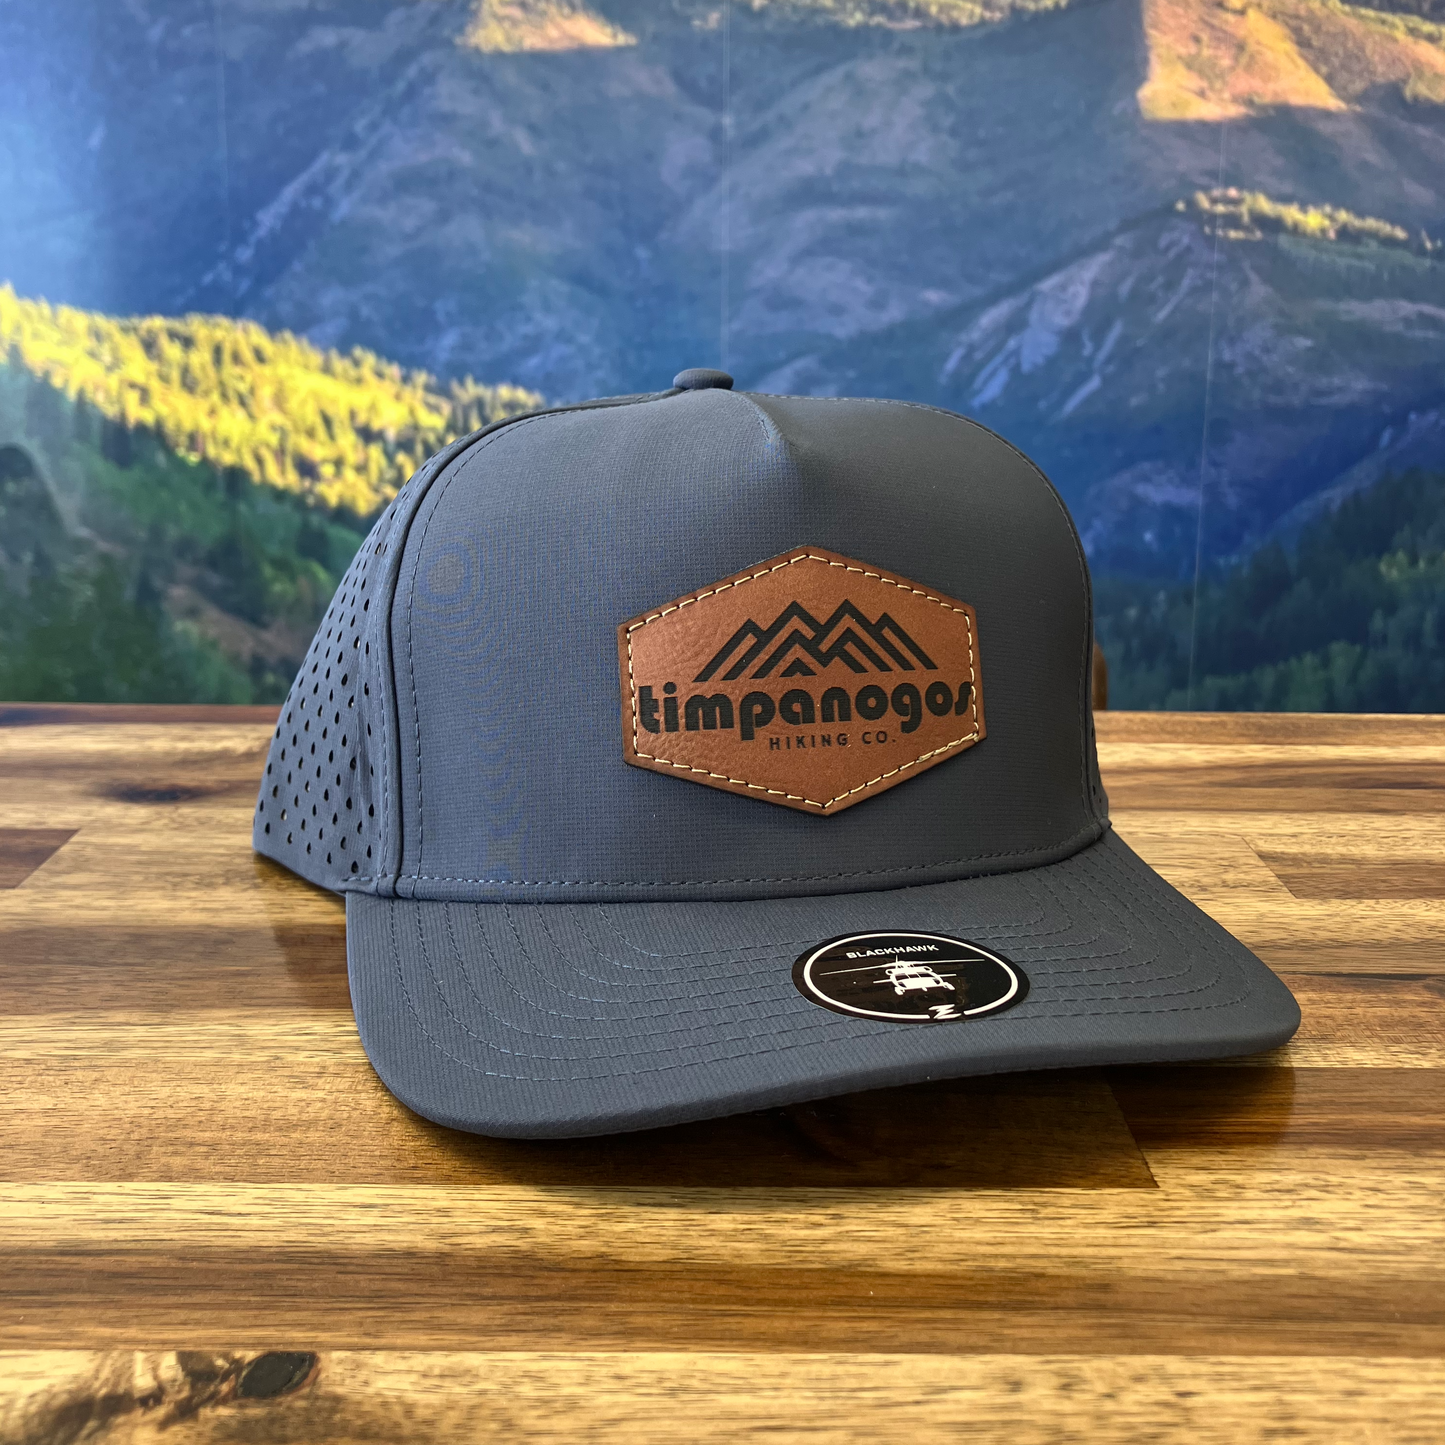 Timpanogos Hiking Co. Blackhawk Hat (Navy Blue)